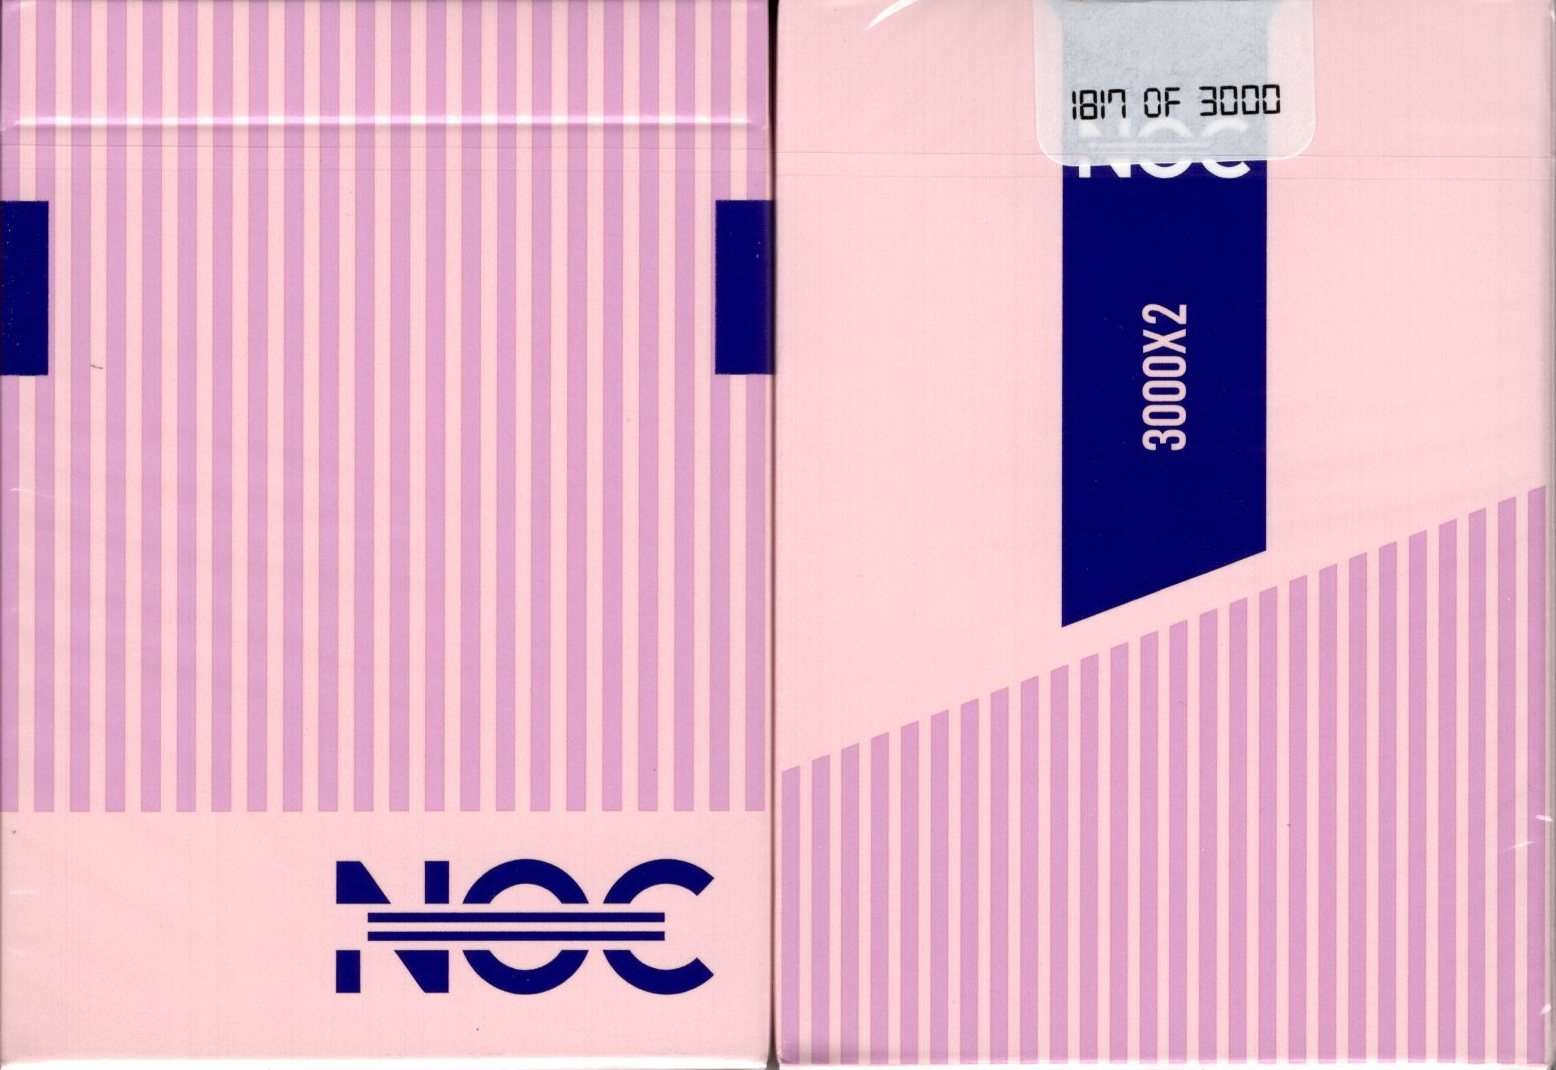 PlayingCardDecks.com-NOC3000X2 Pink Playing Cards USPCC